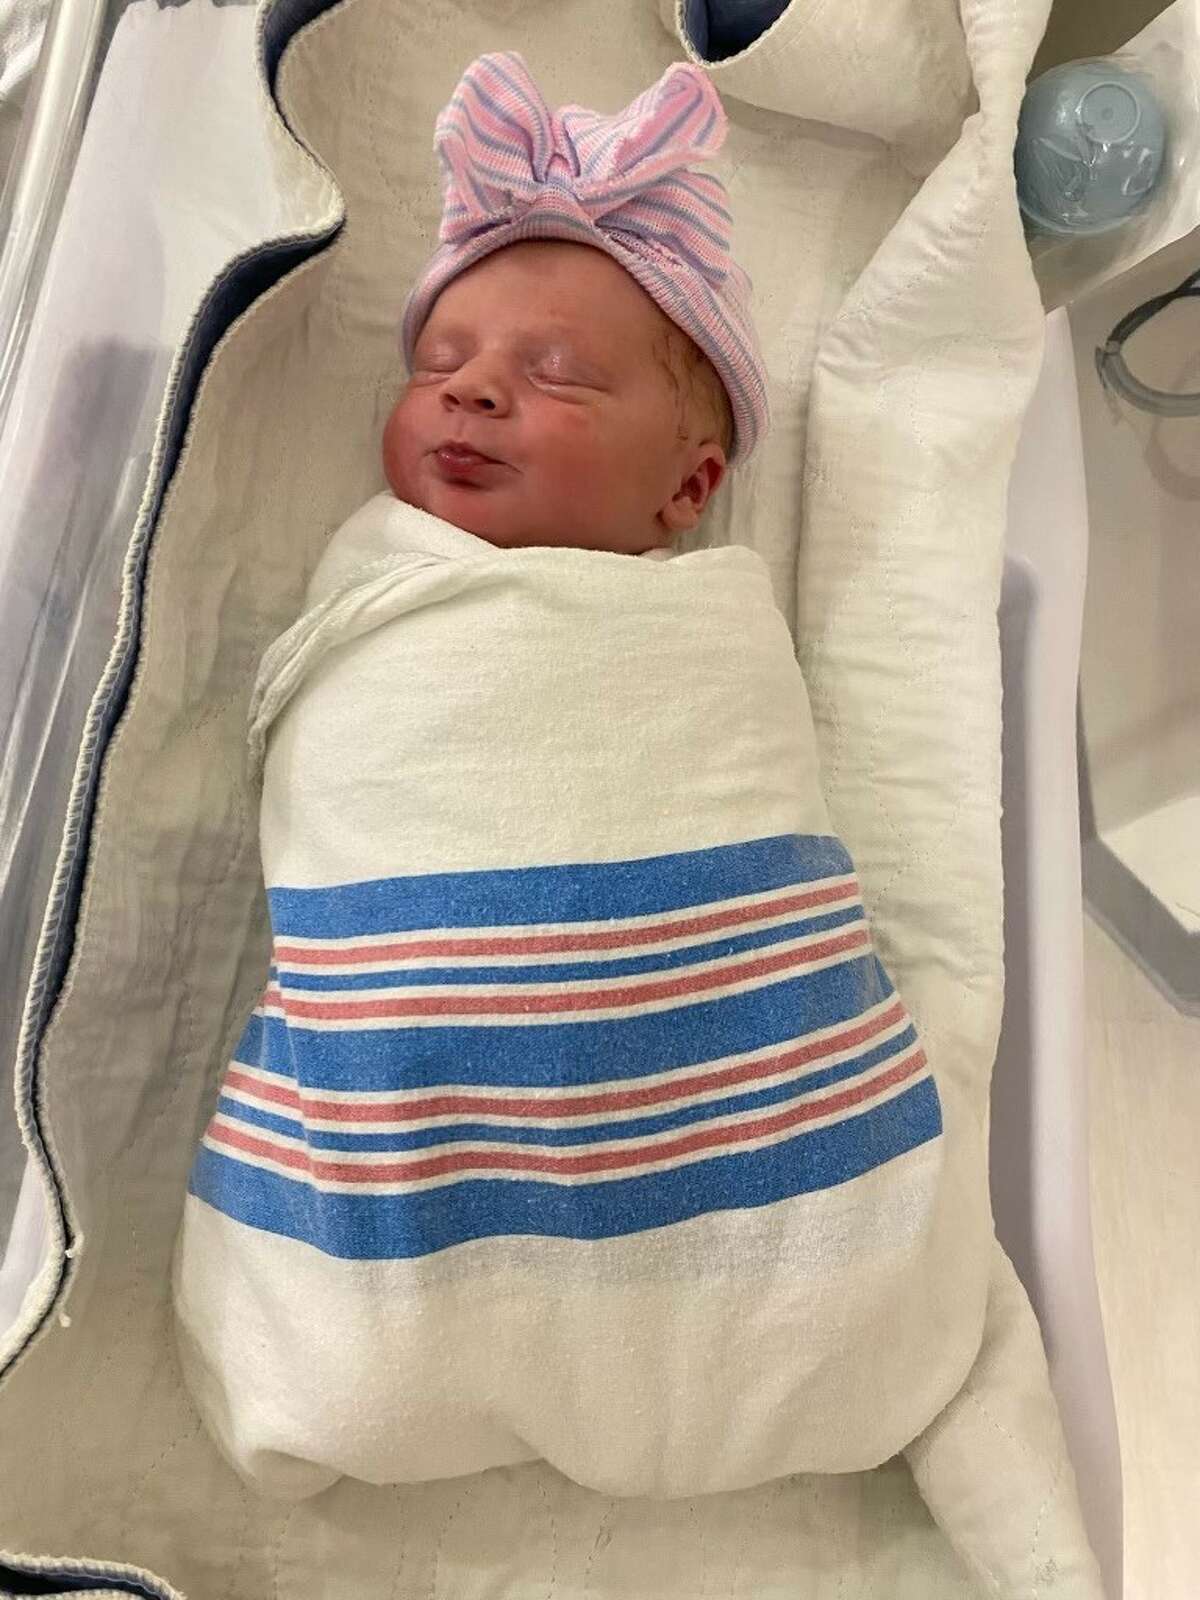 Newborn Presley Vaclavik, who was born on 2-22-2022 at 2:22 am. 